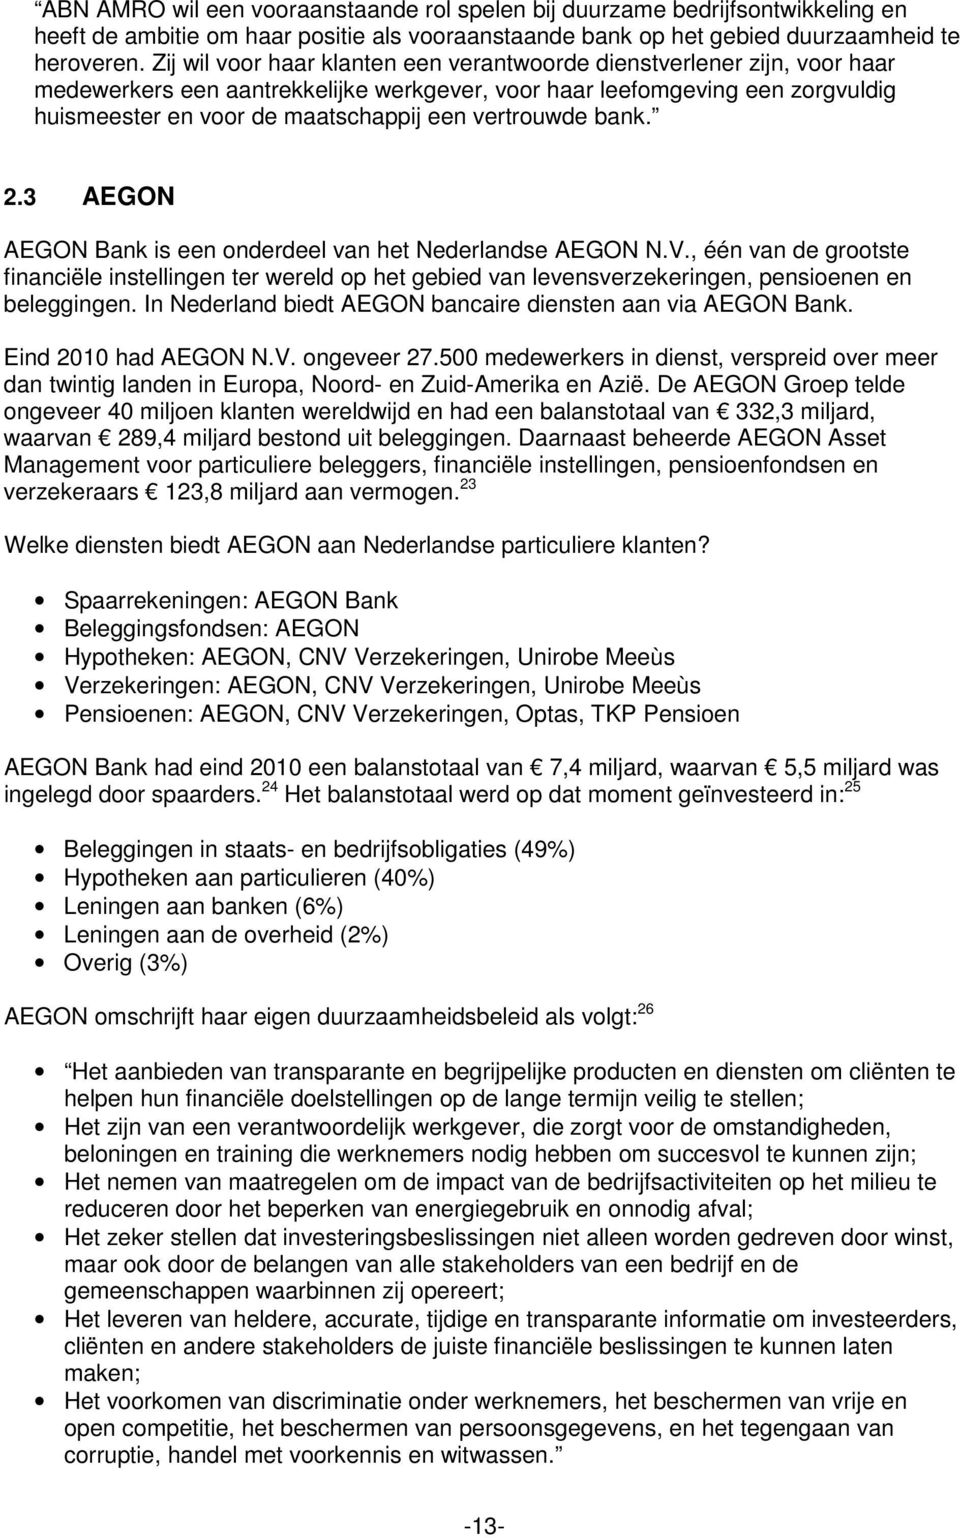 vertrouwde bank. 2.3 AEGON AEGON Bank is een onderdeel van het Nederlandse AEGON N.V.